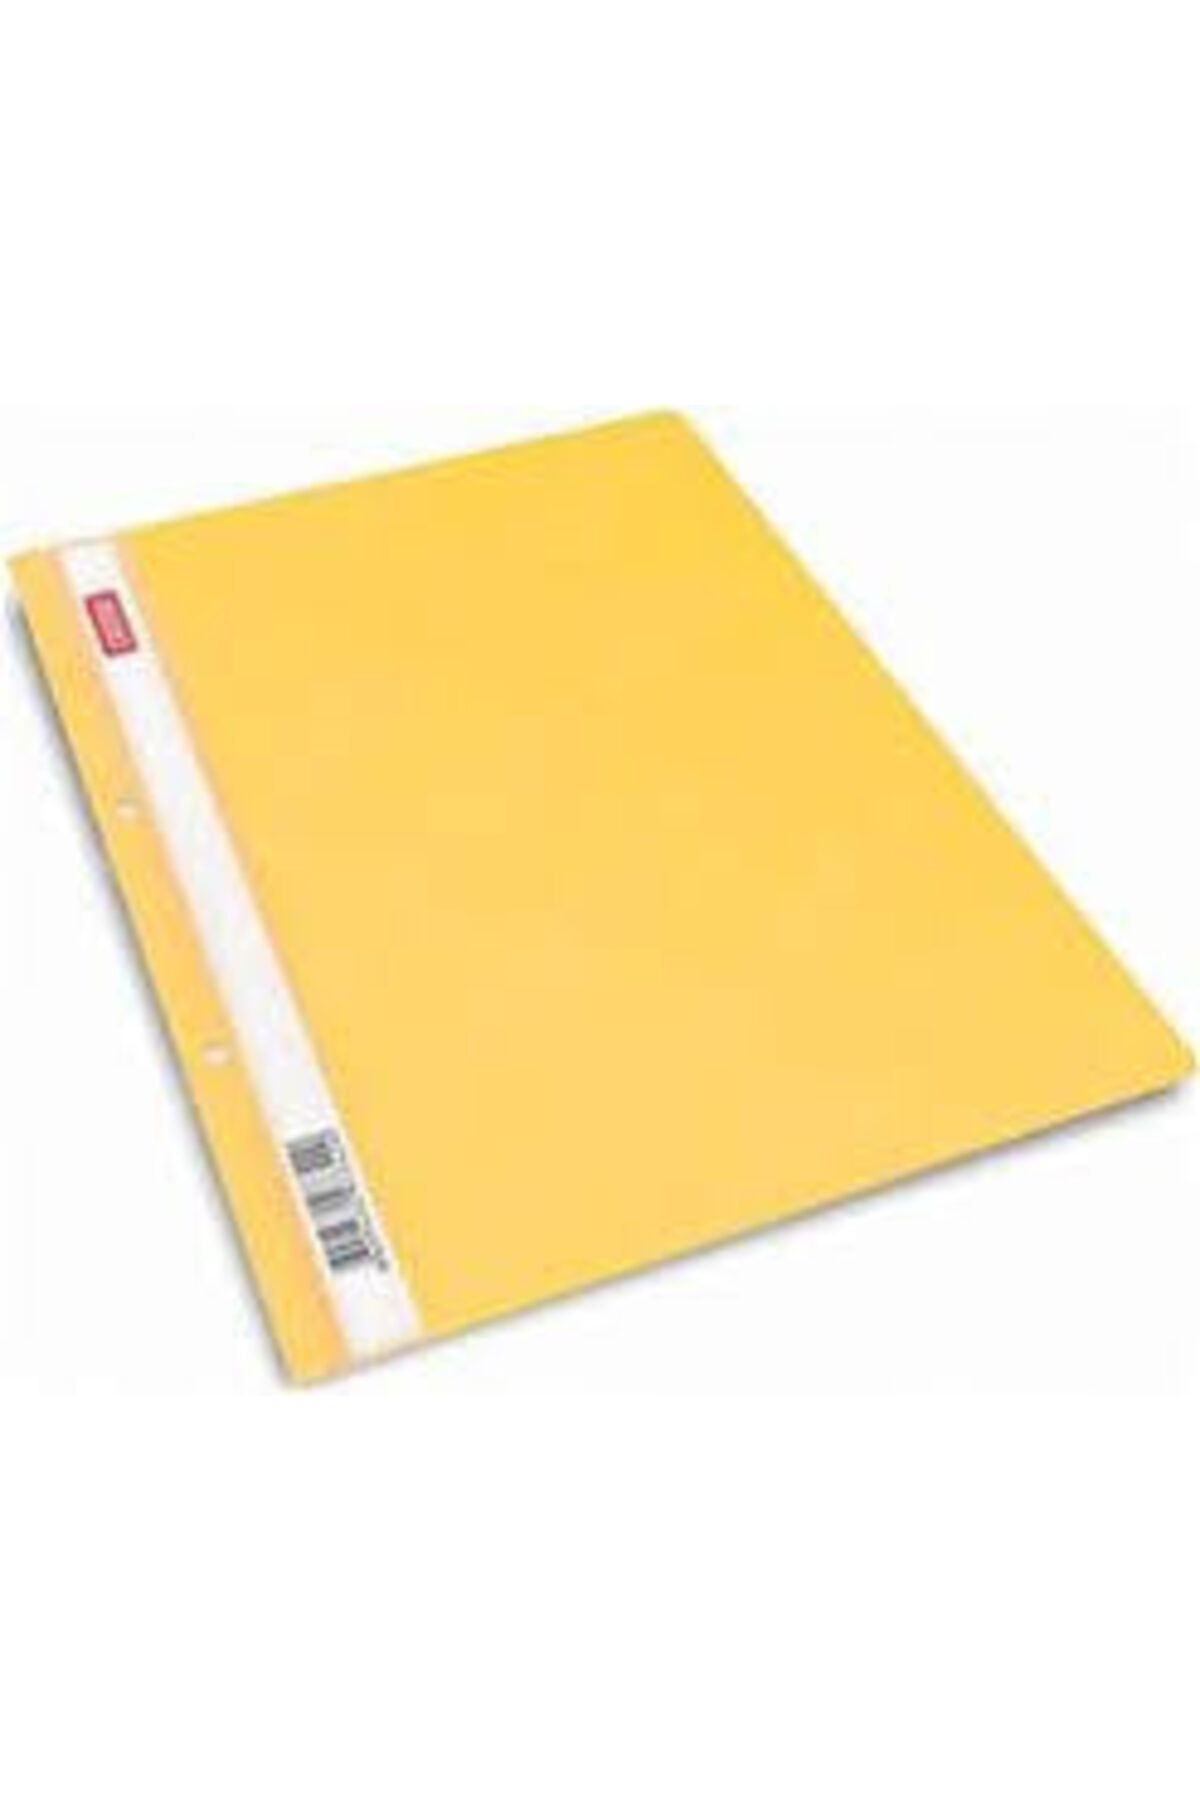 Cassa Sarı Renk Telli Dosya 7735 25 Adet